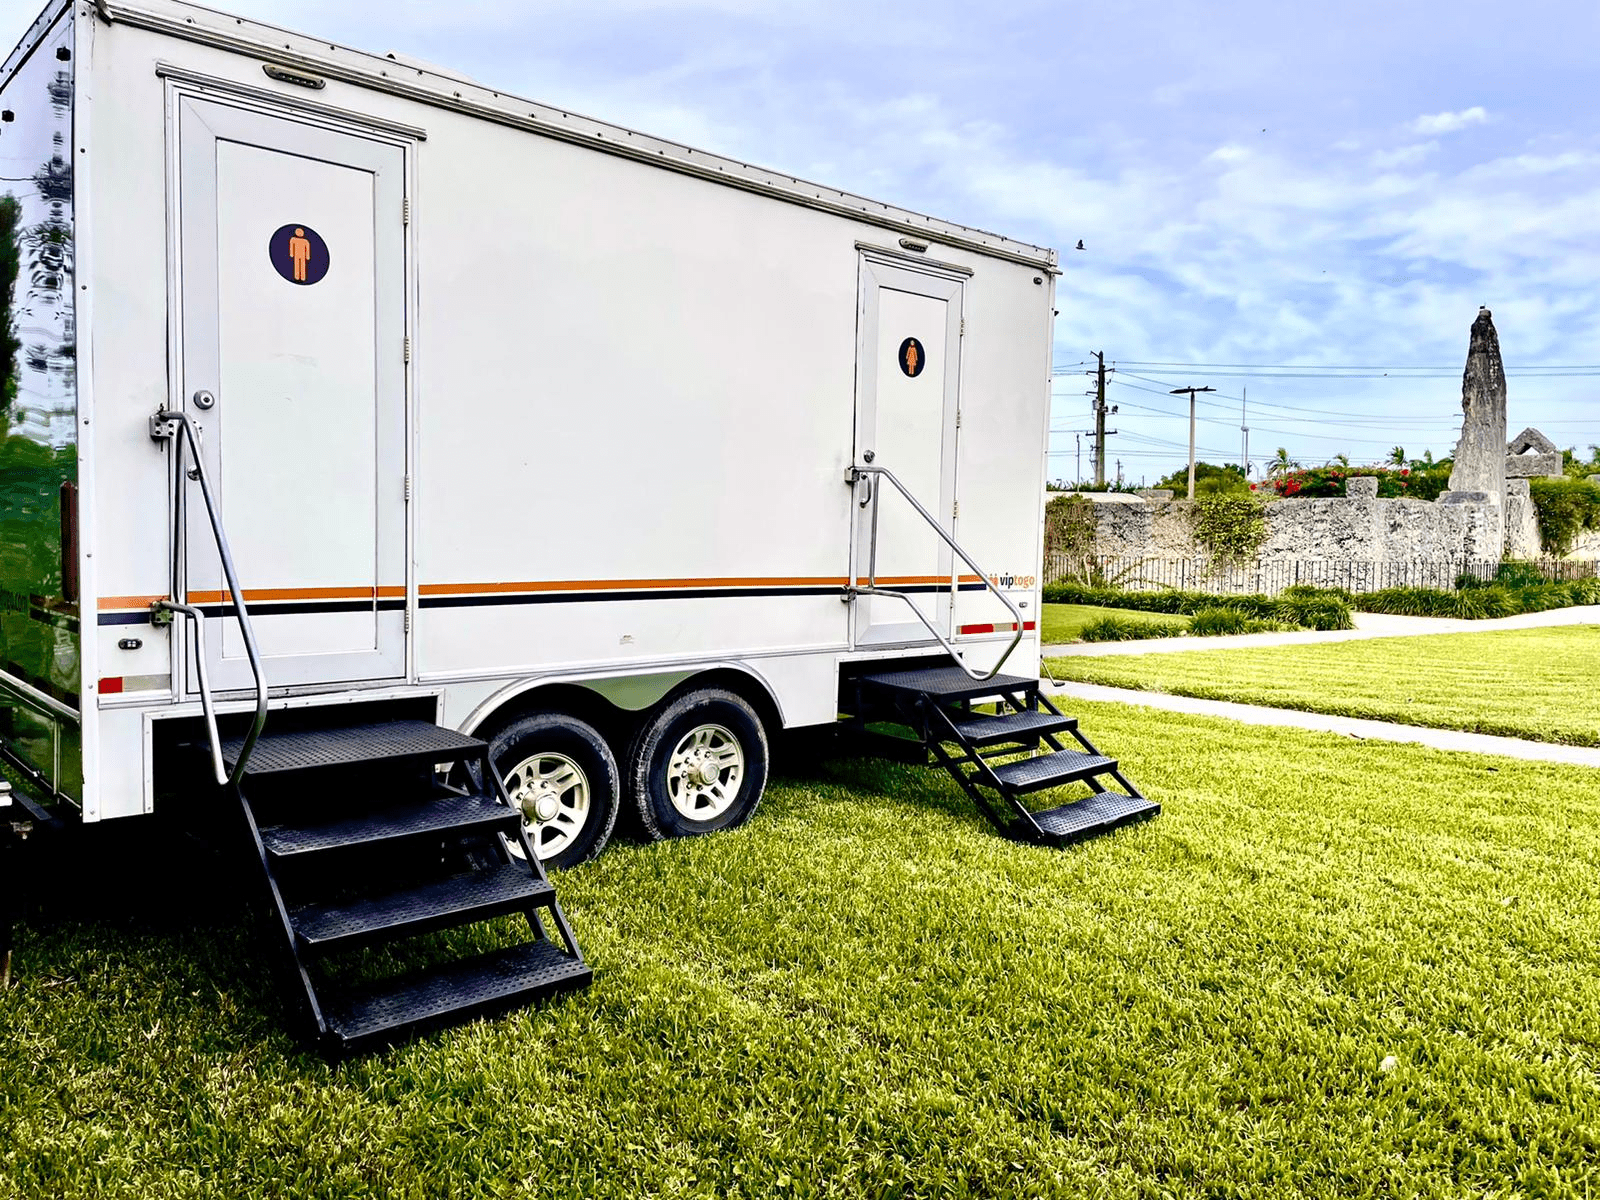 Premium restroom trailer rentals at an outdoor event